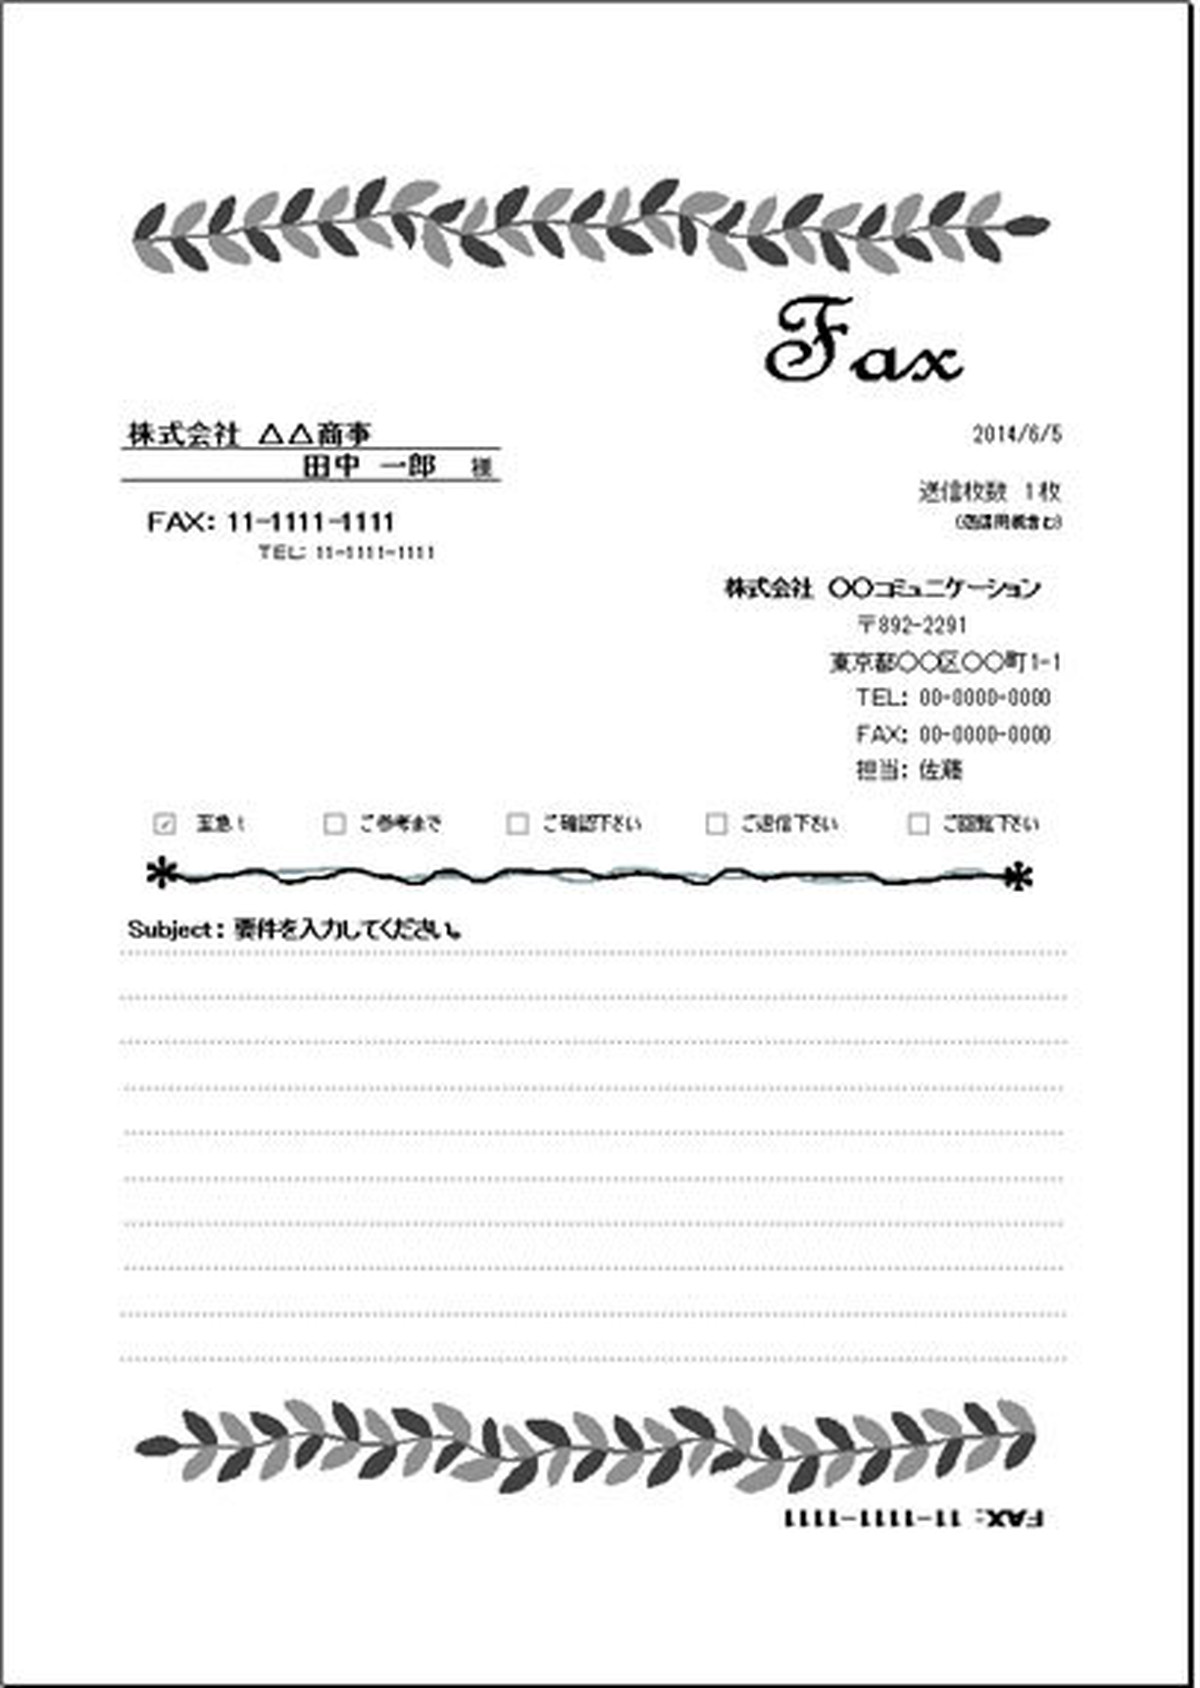 Dl Excelでfax送信状 リーフ Pancom